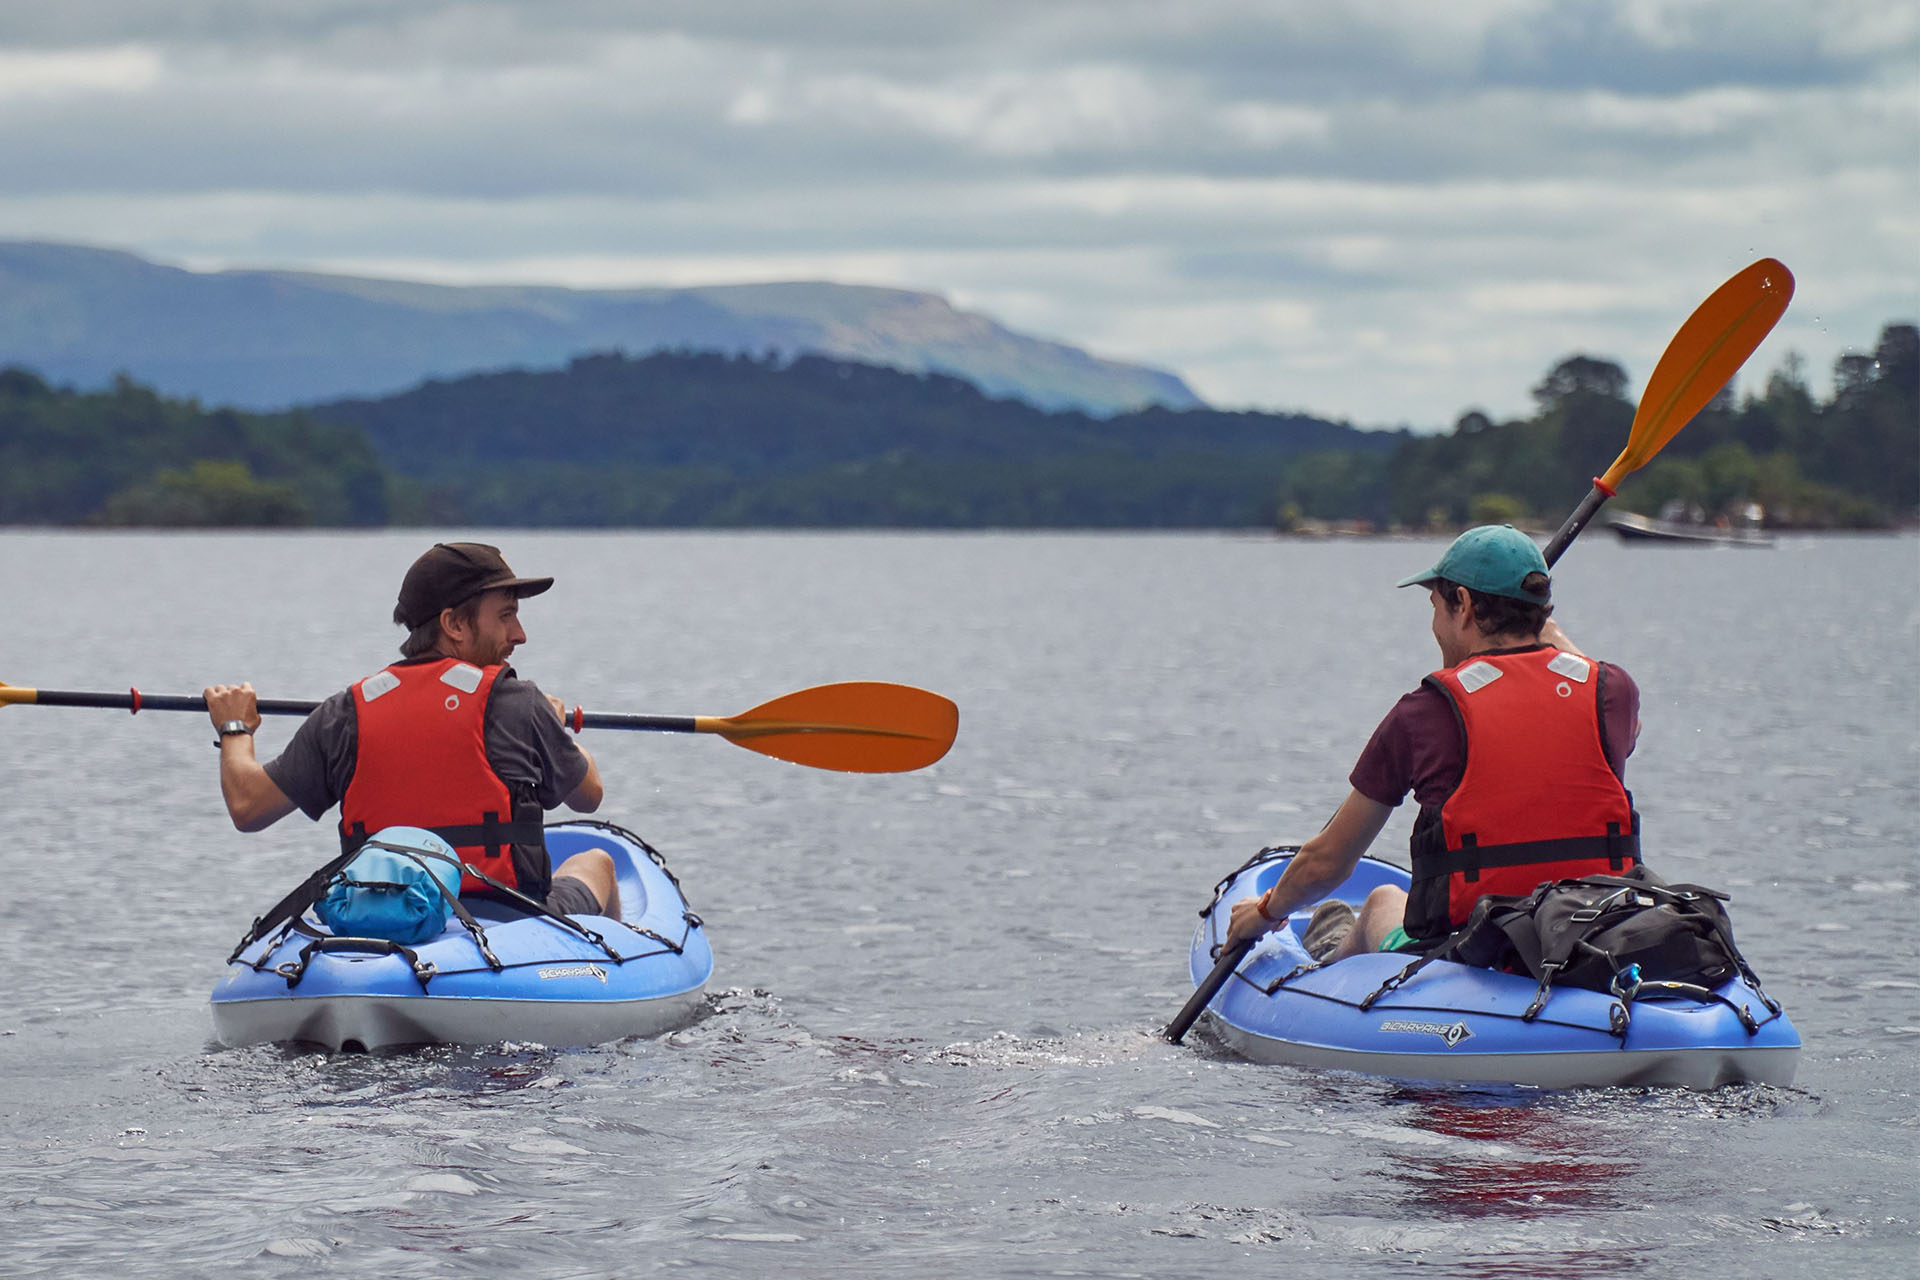 Two people on kayaks on Loch Lomond